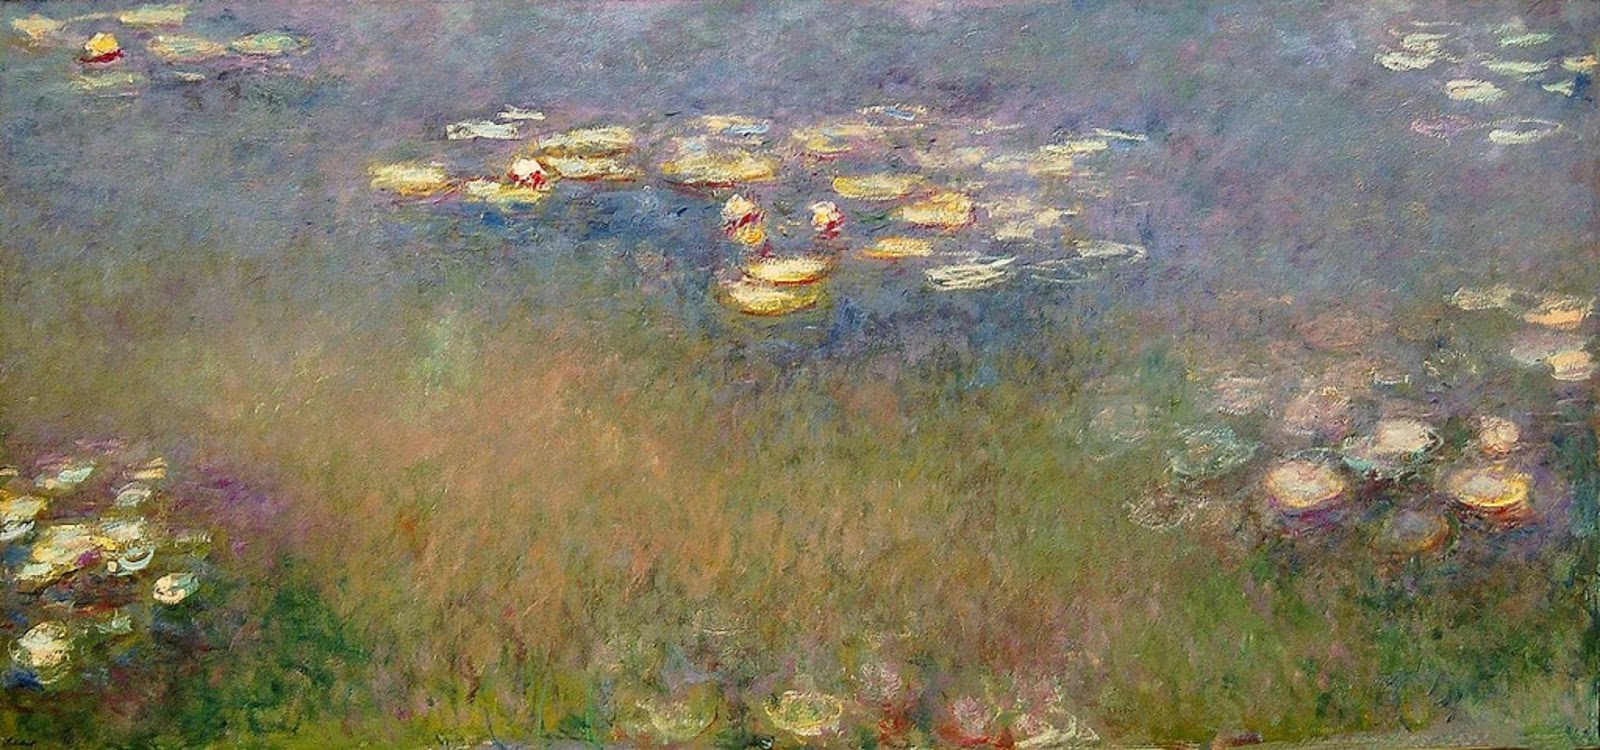 Claude+Monet-1840-1926 (384).jpg